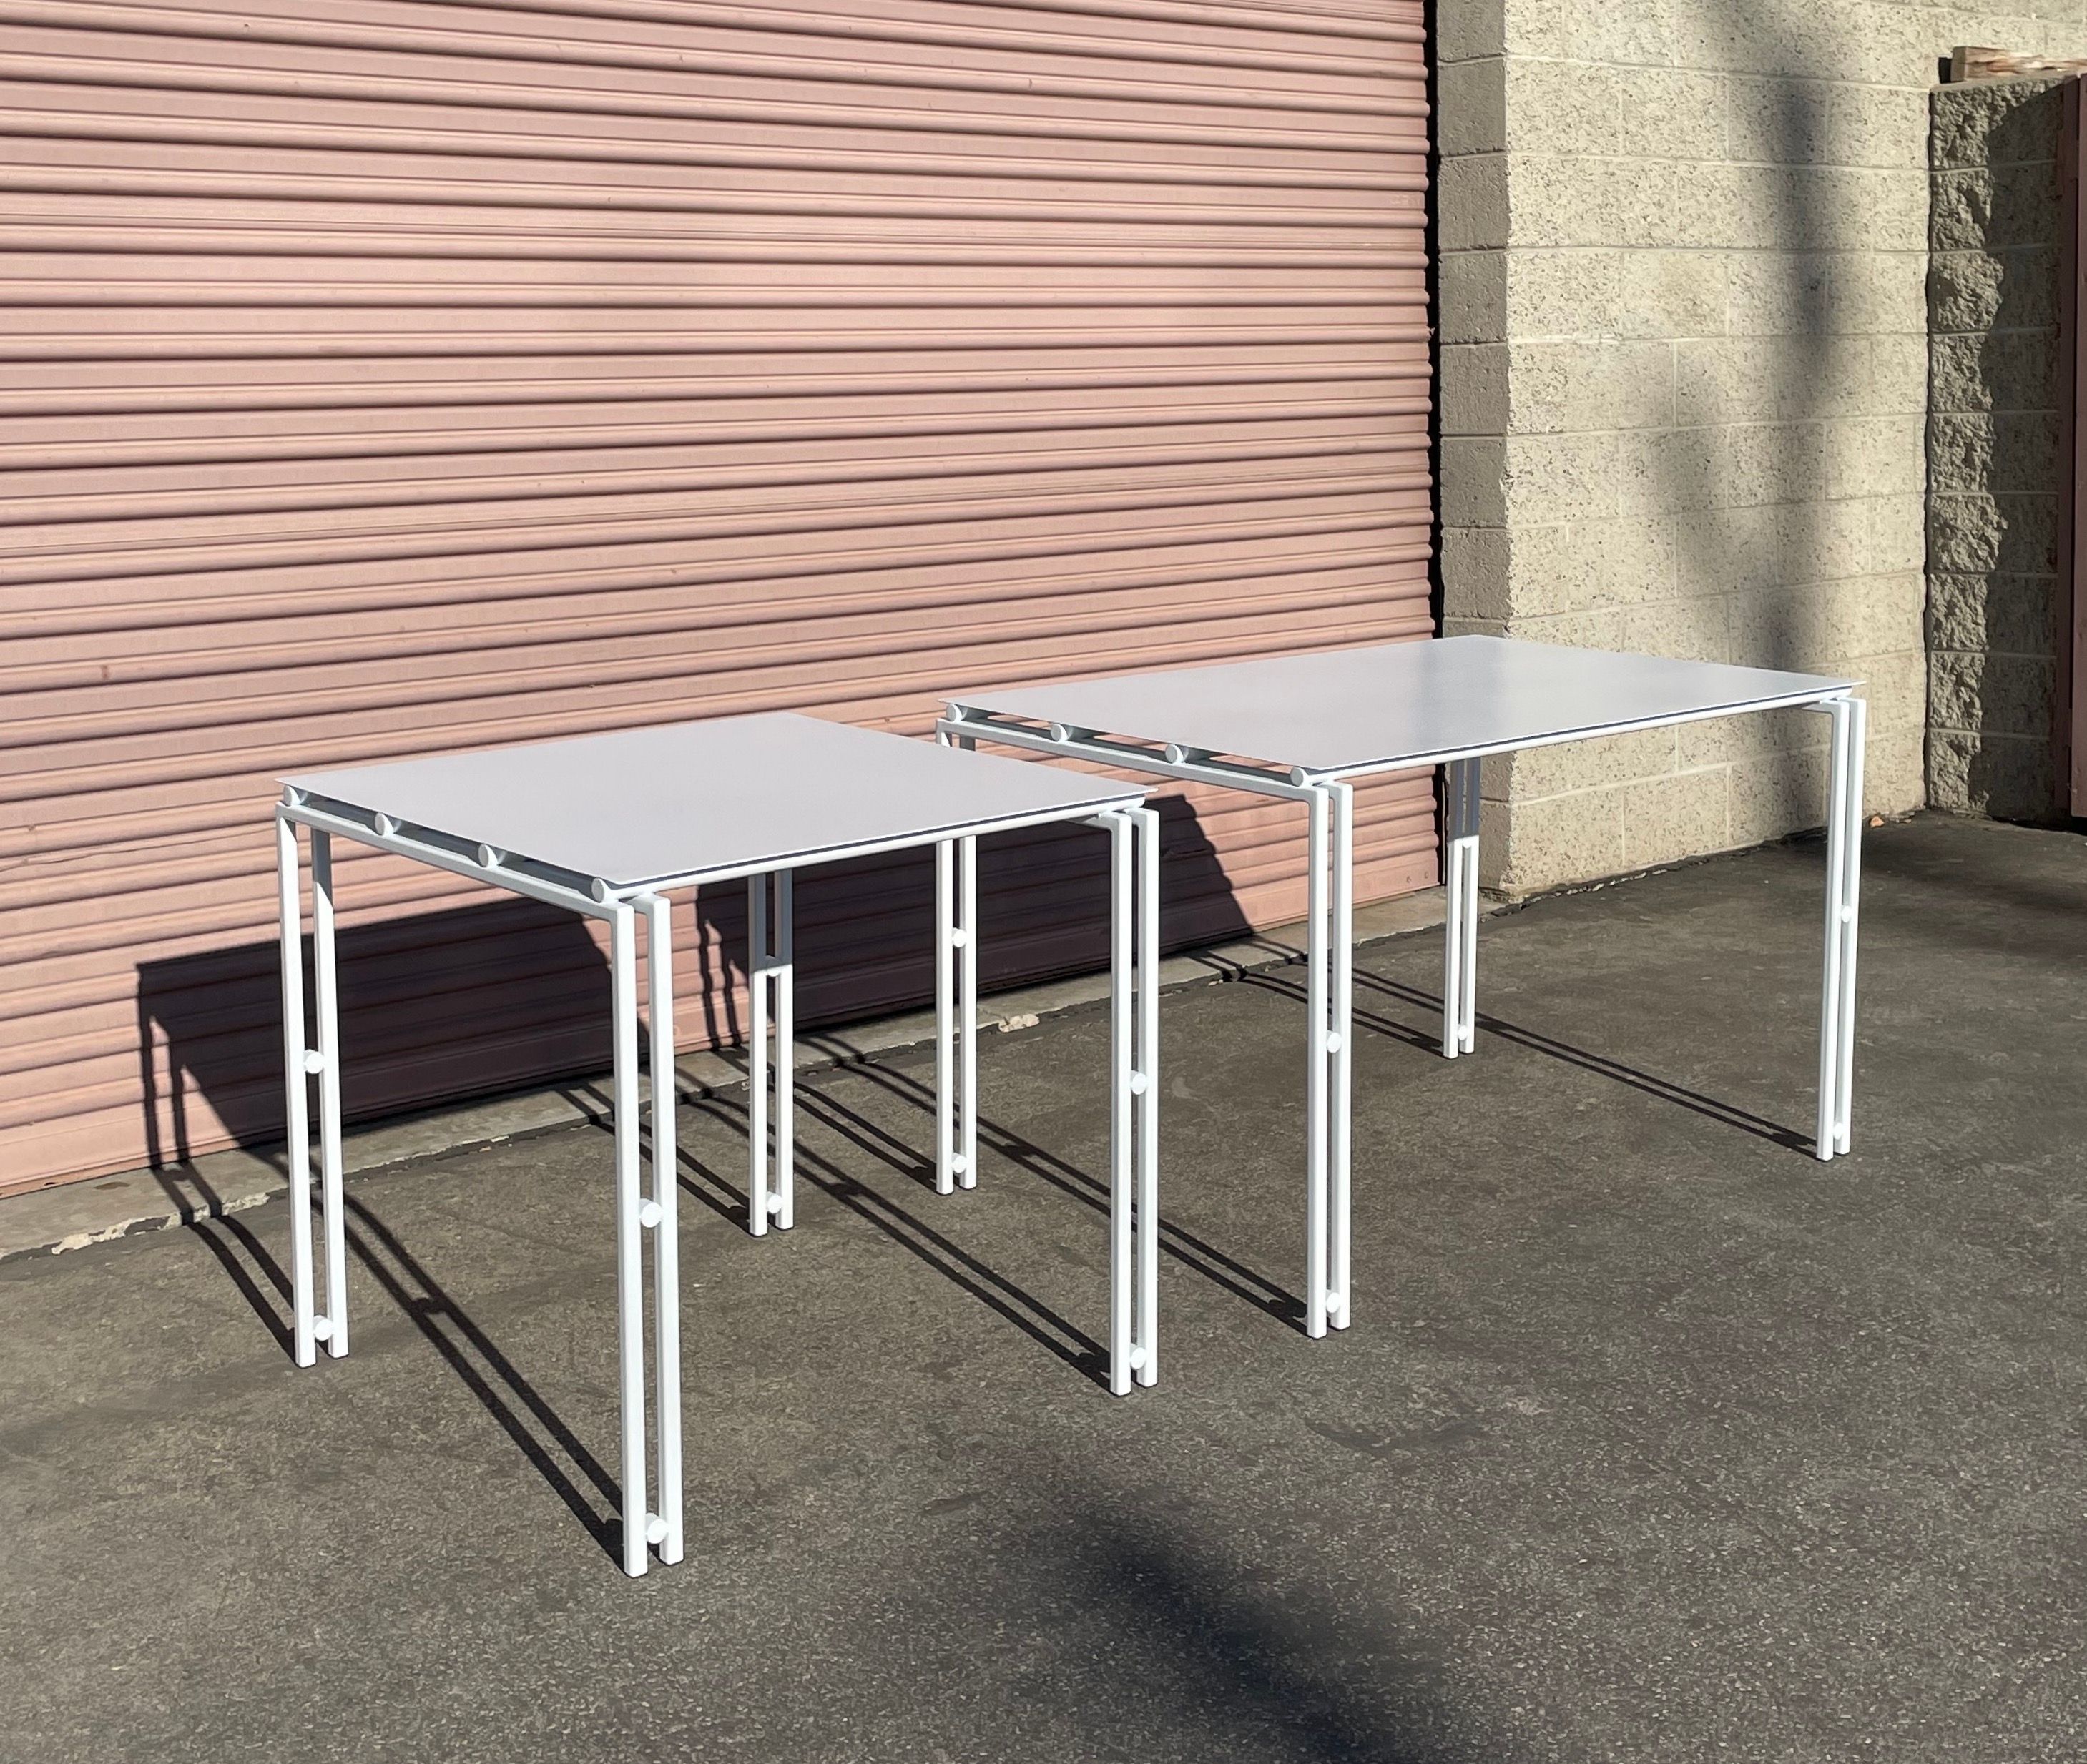  Suspension Tables - Frankie & Essl’s product image 2